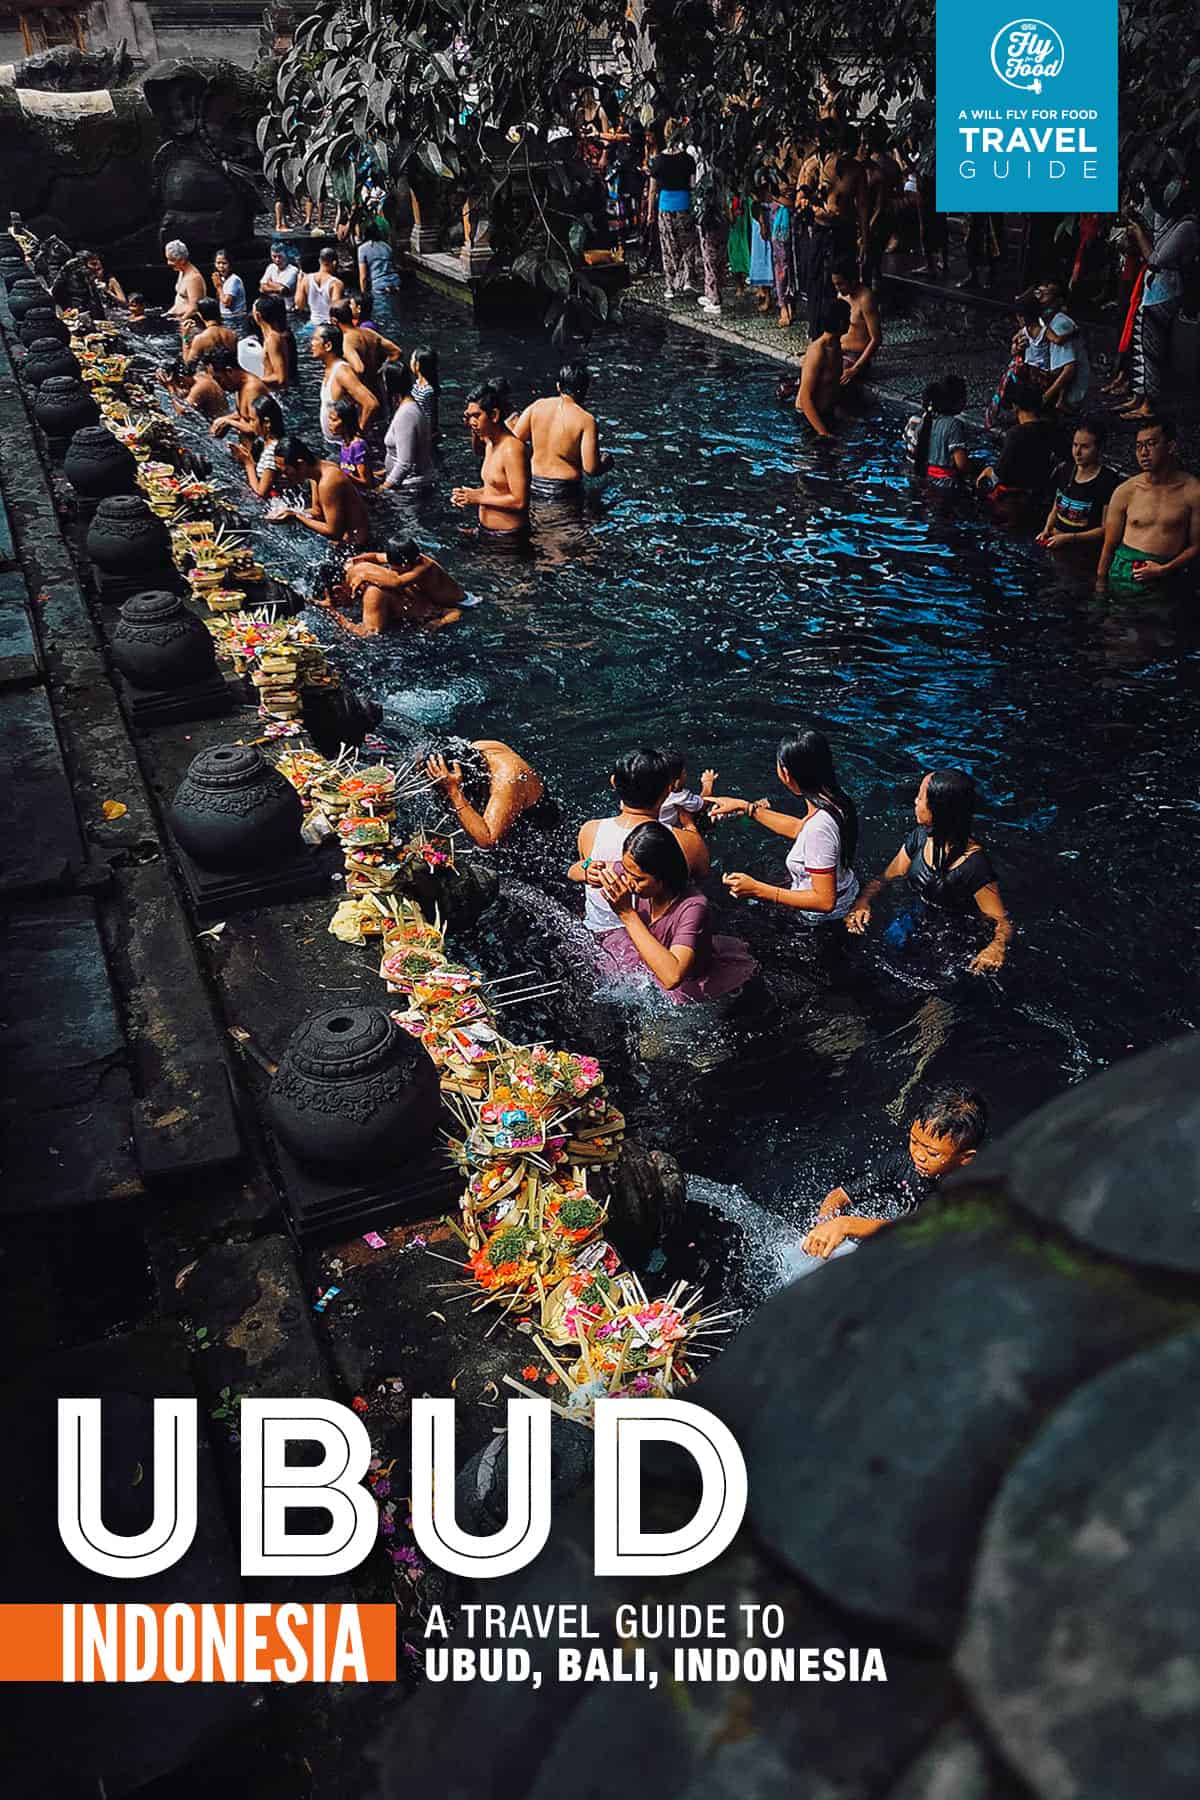 Bathing at Tirtu Empul Temple in Ubud, Bali, Indonesia